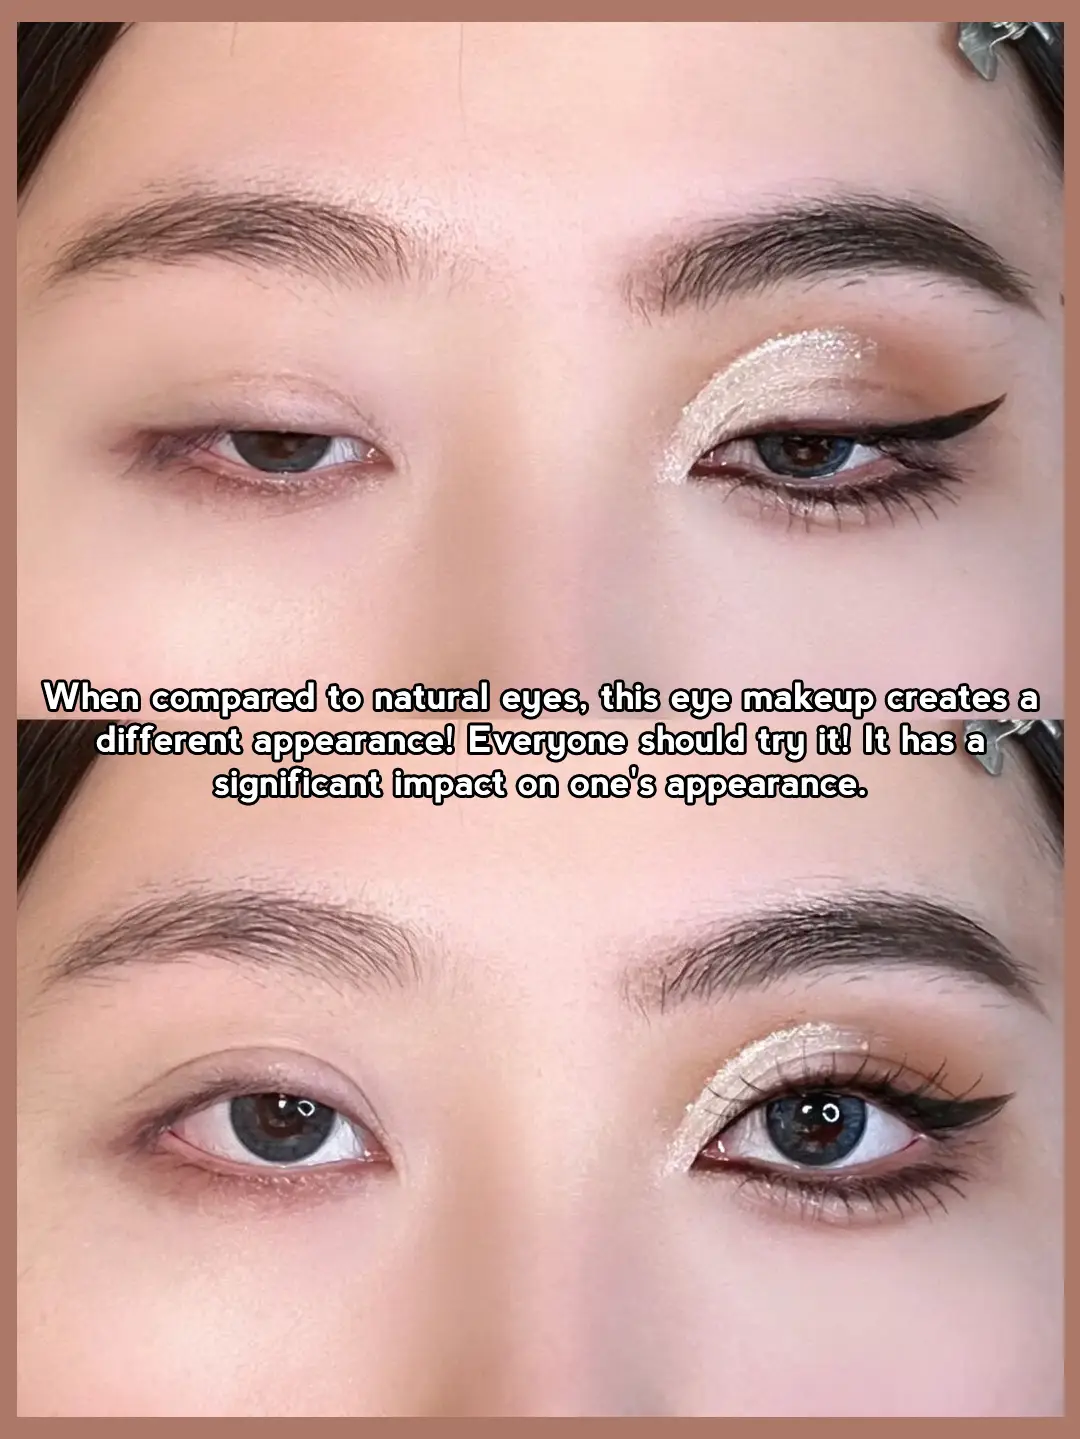 Stunning Eye Makeup For Beginners